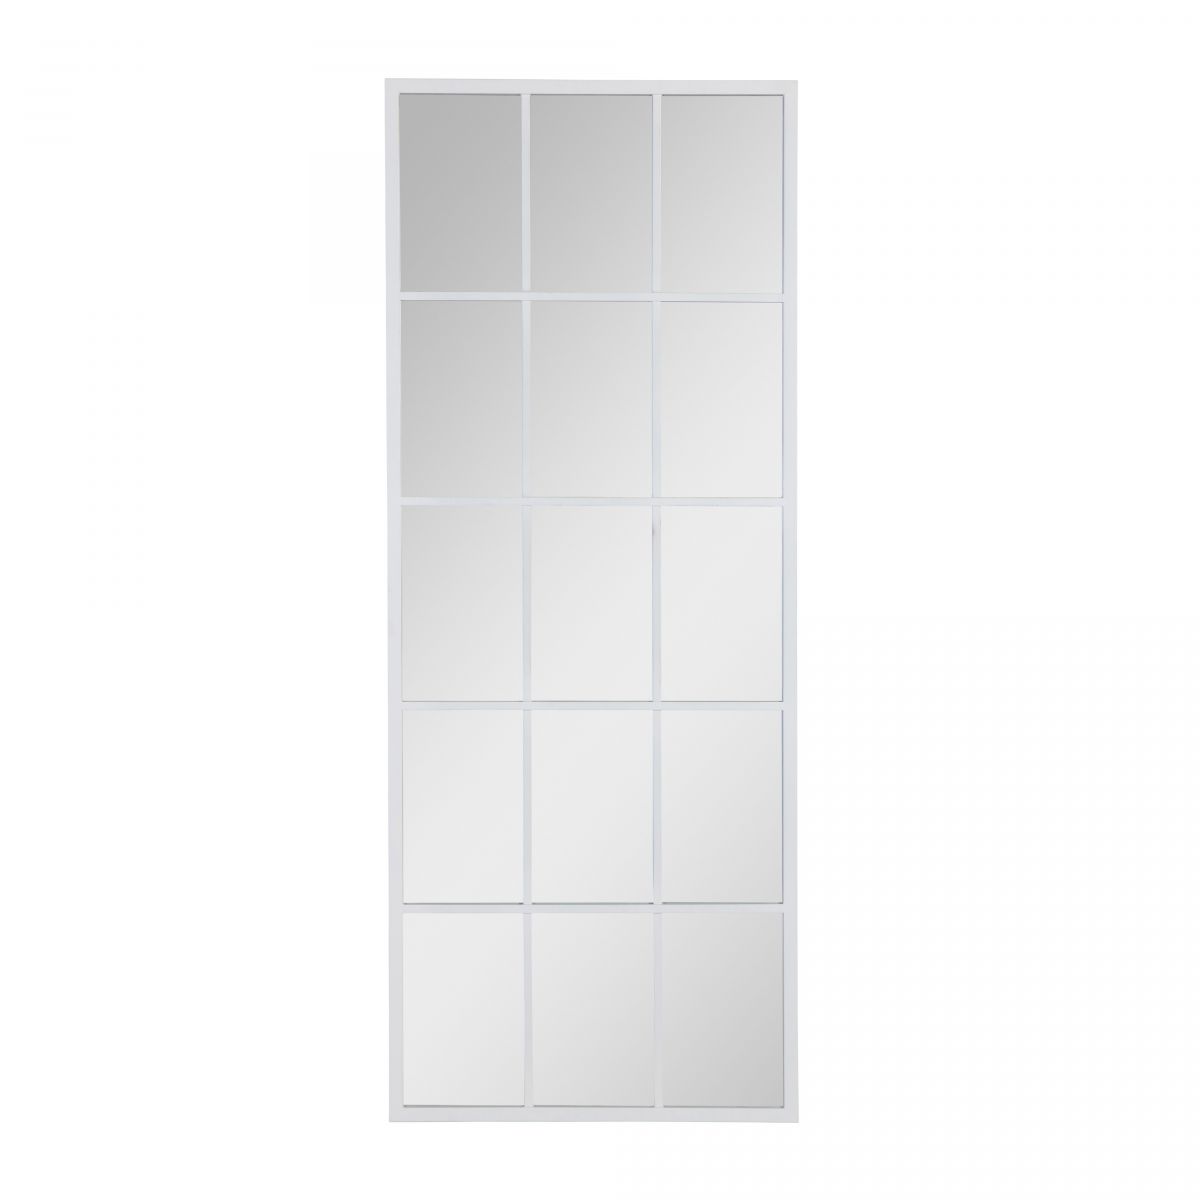 White metal framed window pane mirror